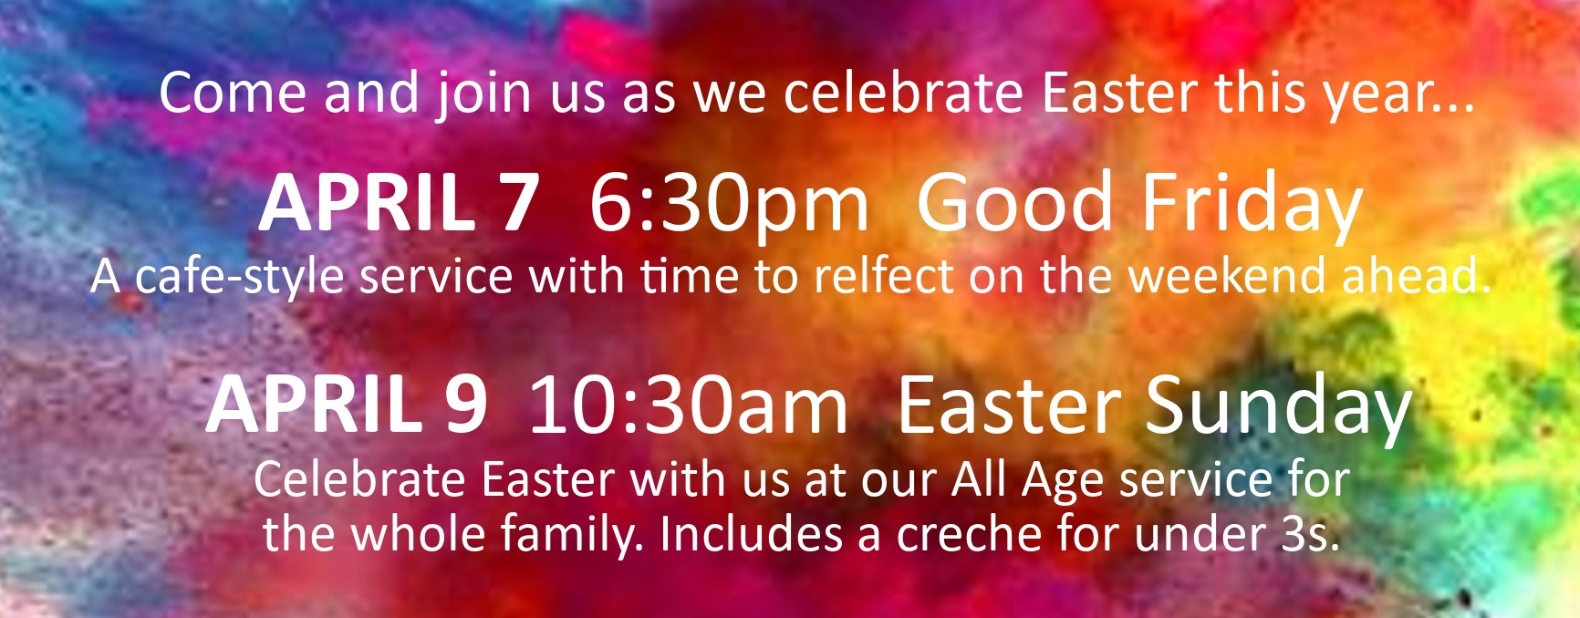 Easter Extravaganza Details